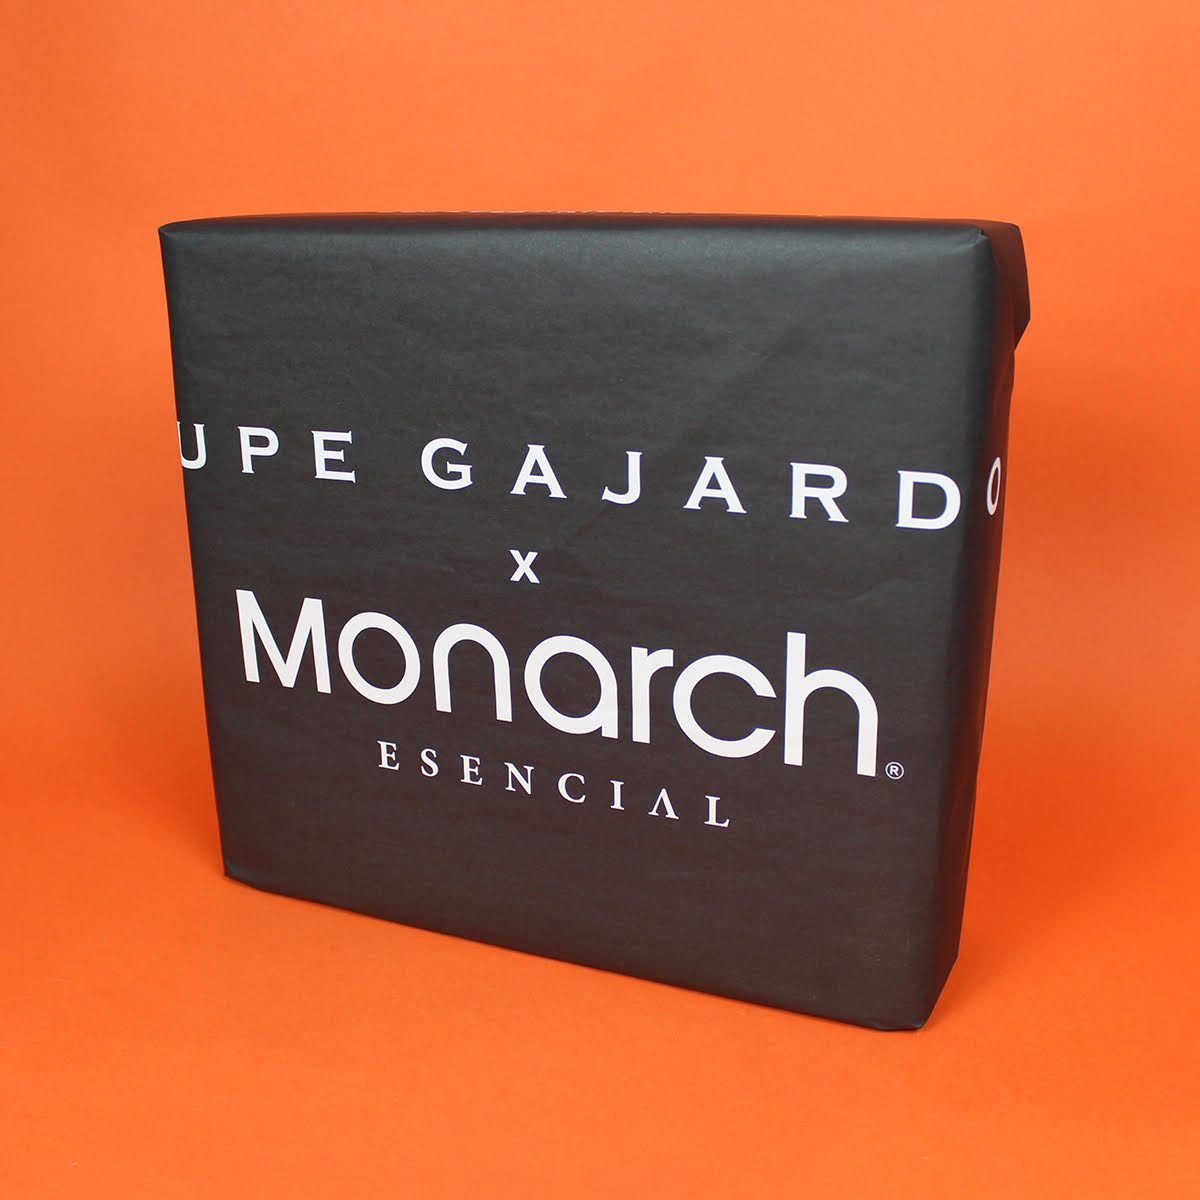 Lupe Gajardo x Monarch - Mystery Box 6 Productos